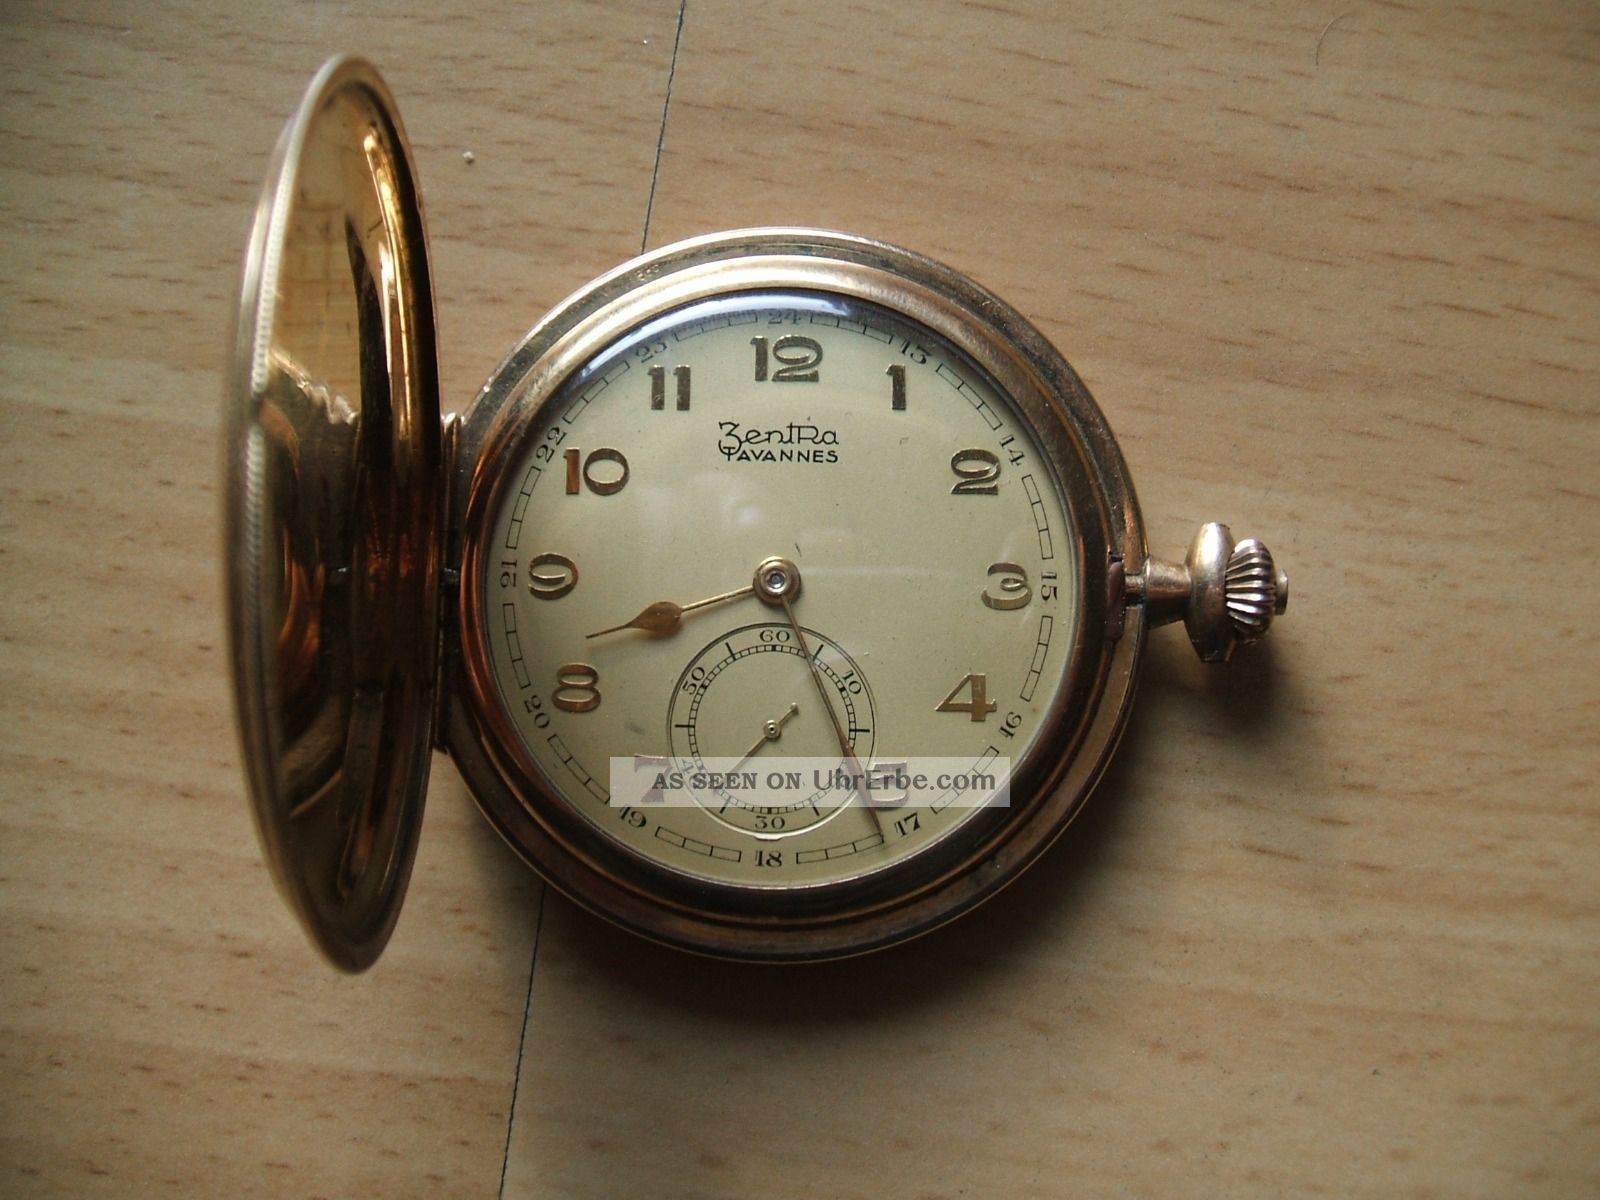 Nachlass Dachbodenfund Opas Sammlung Alte Zentra Taschenuhr 585 Gestempelt Armbanduhren Bild